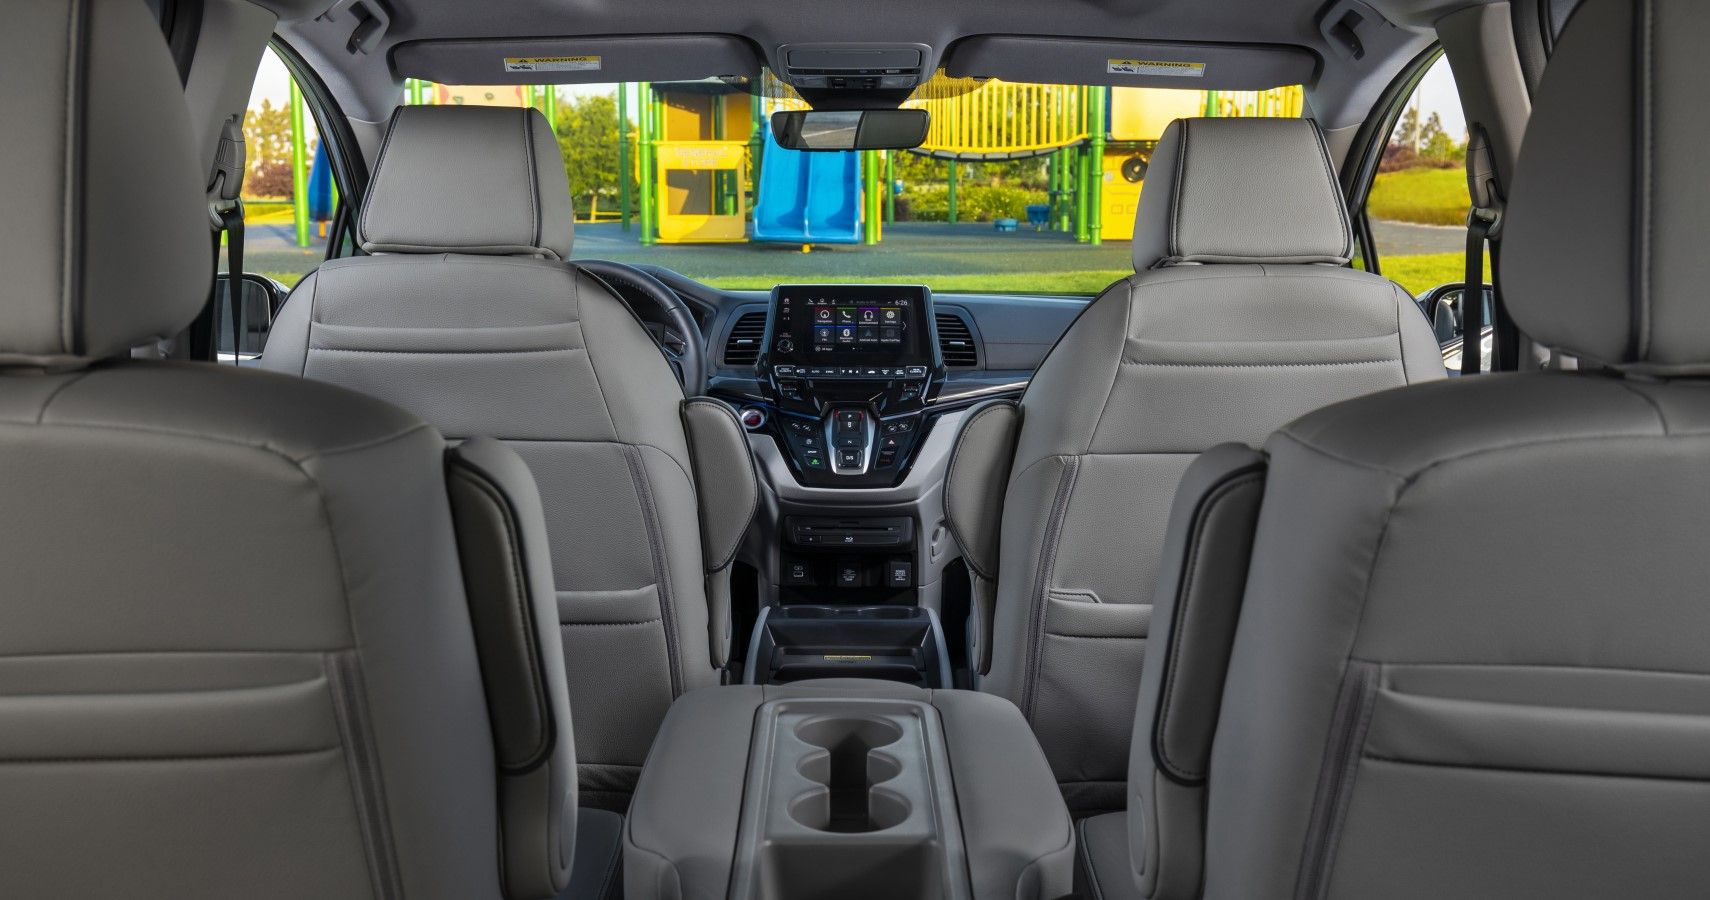 2023 Honda Odyssey Sport seating arrangement layout view